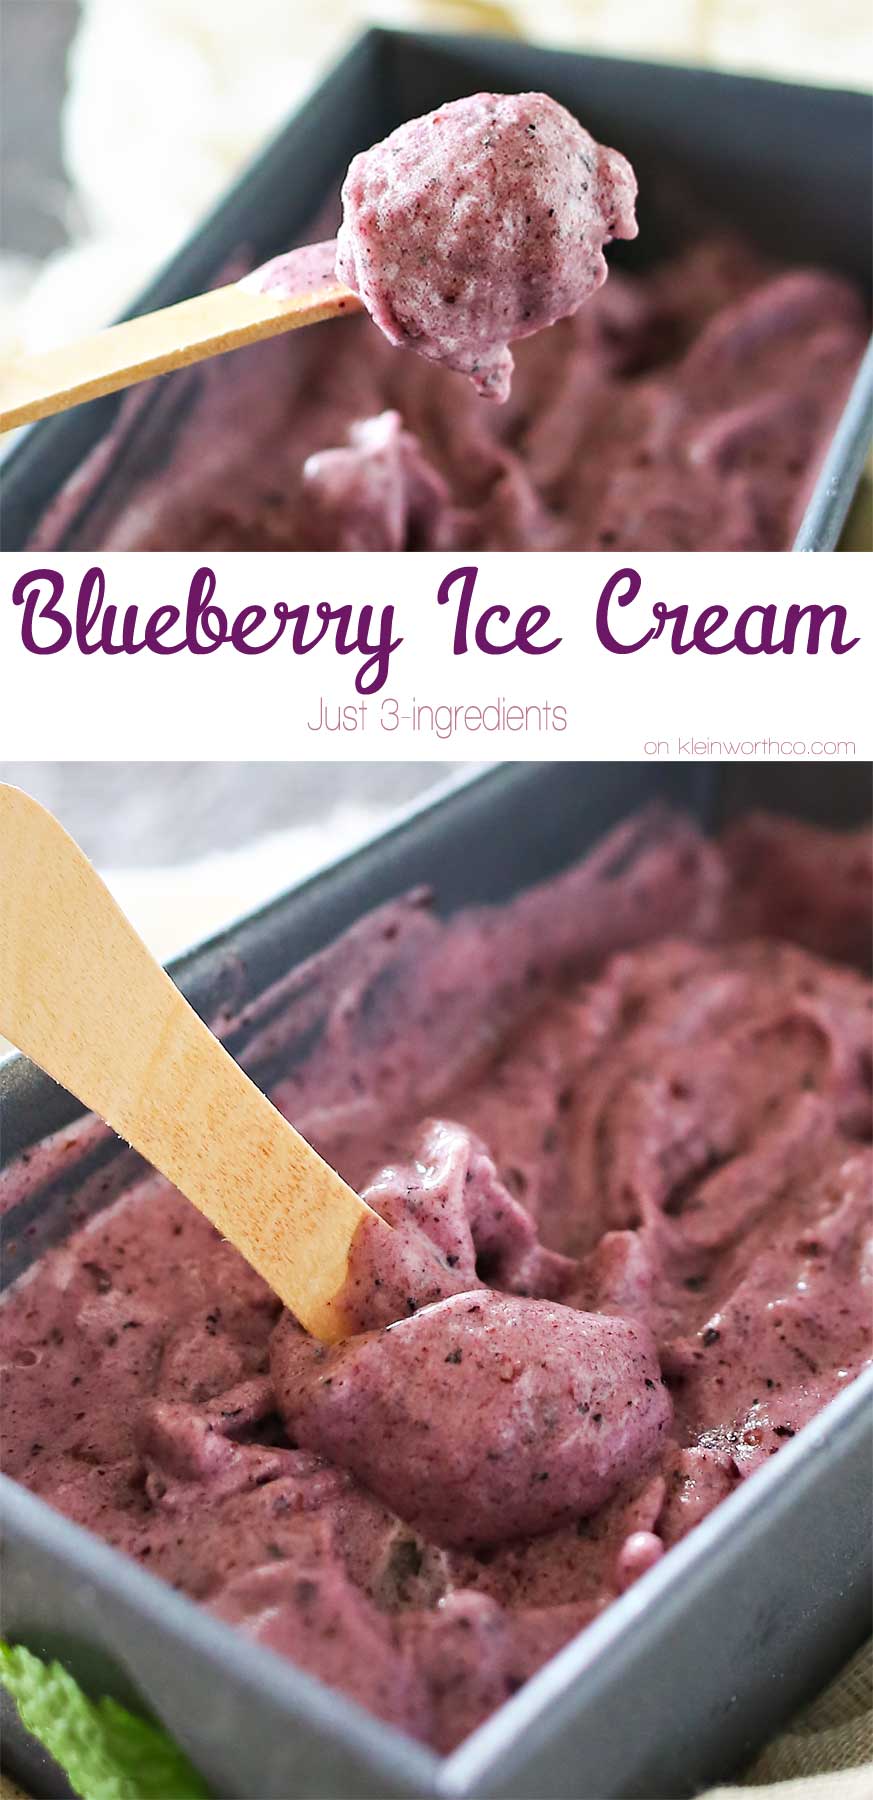 https://www.kleinworthco.com/wp-content/uploads/2016/03/Blueberry-Ice-Cream-1800.jpg